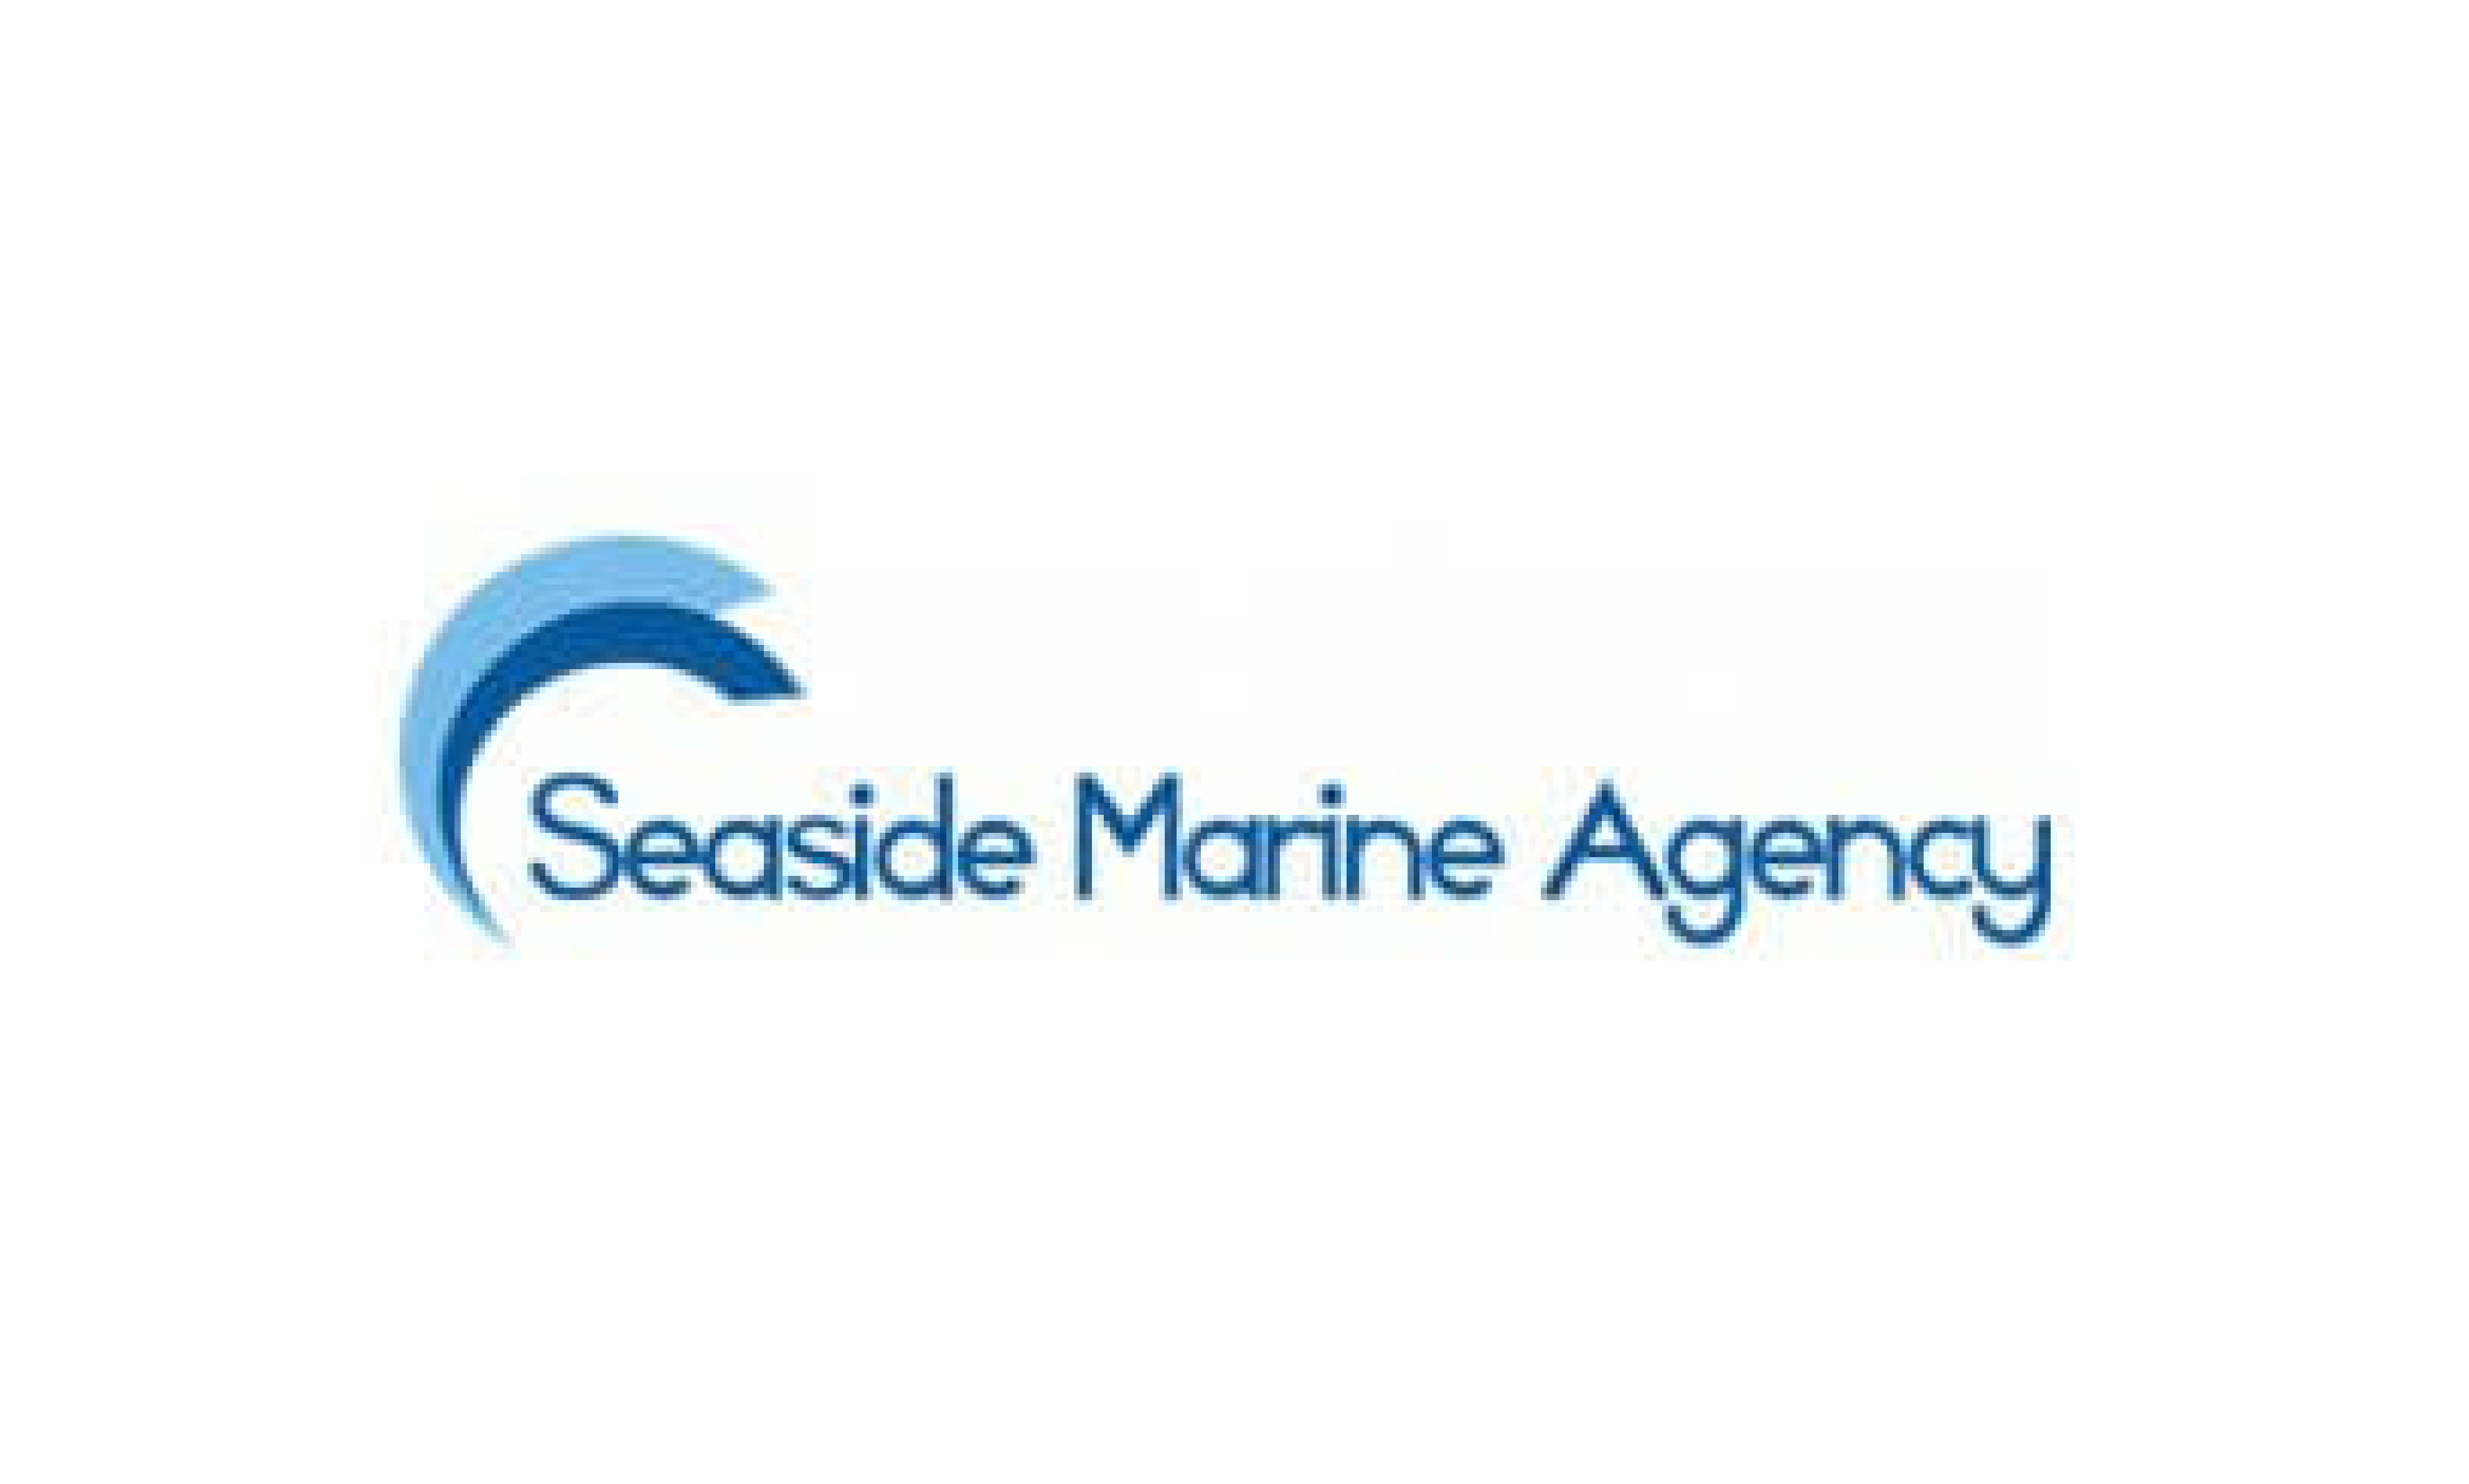 Cliente Seaside Marine Agency